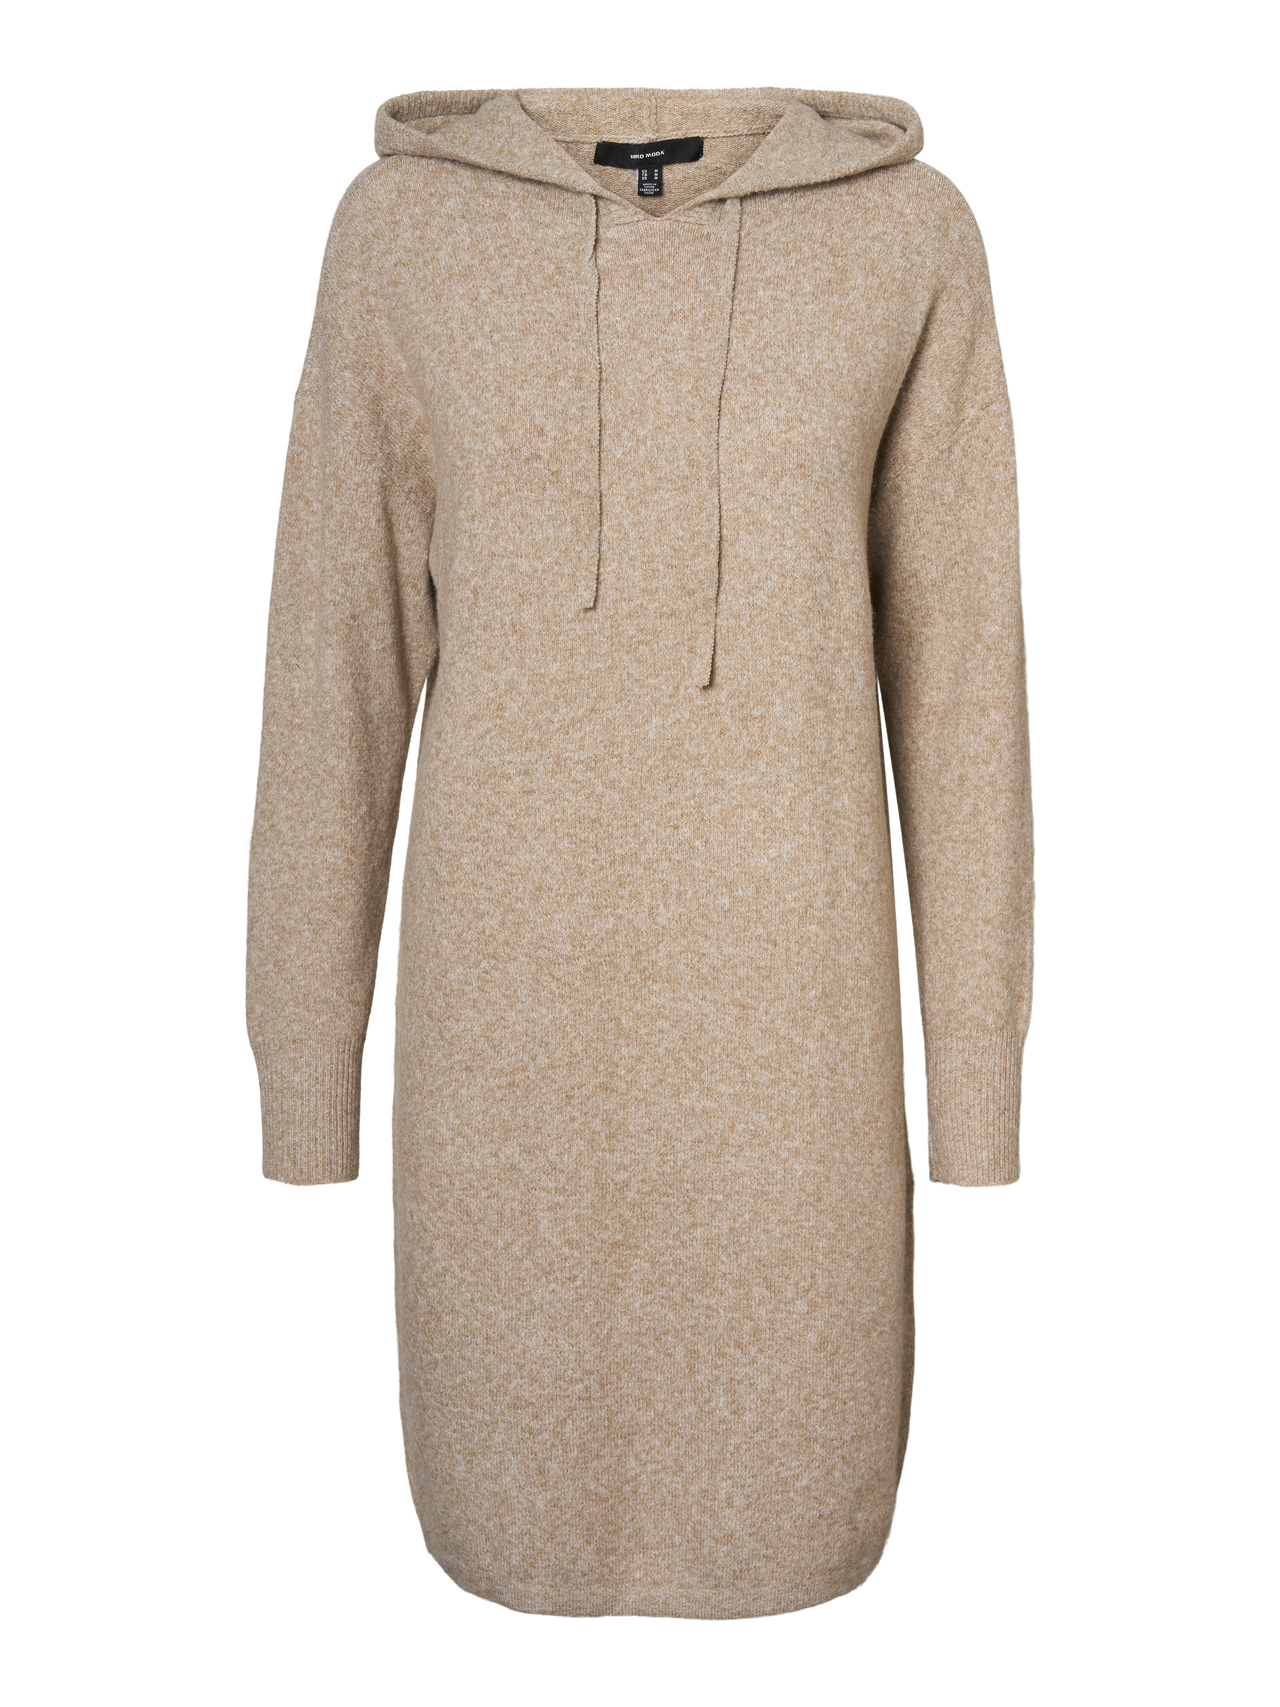 Vero Moda VMDOFFY Kort kjole -Sepia Tint - 10236978